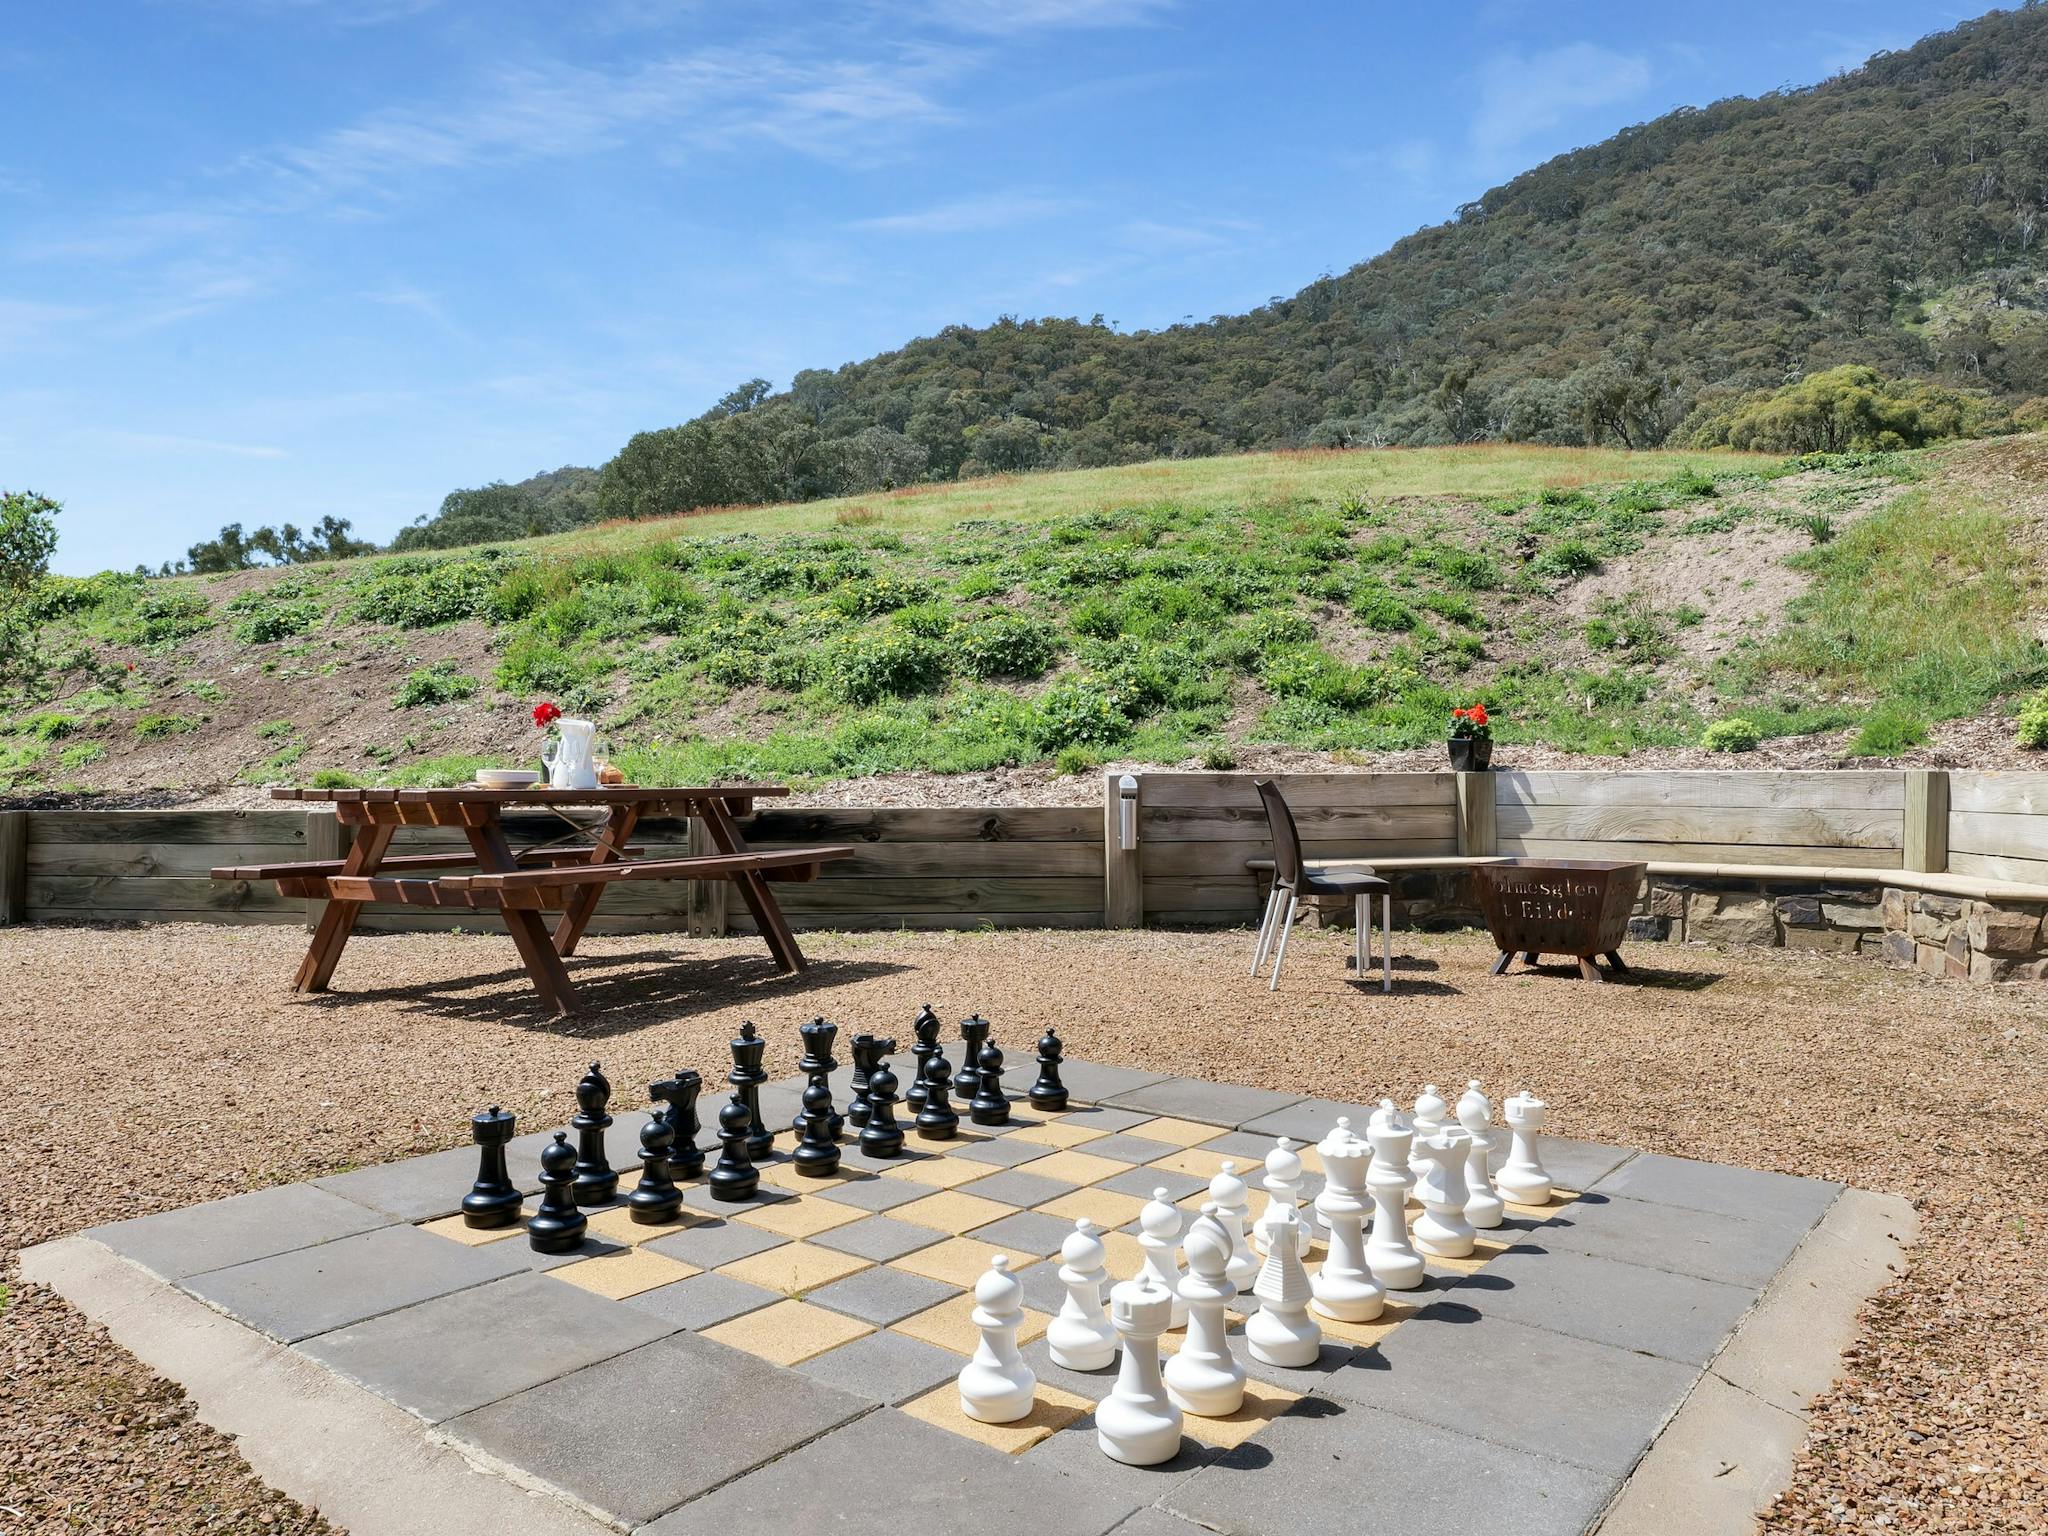 Outdoor Entertainment area - Chess set